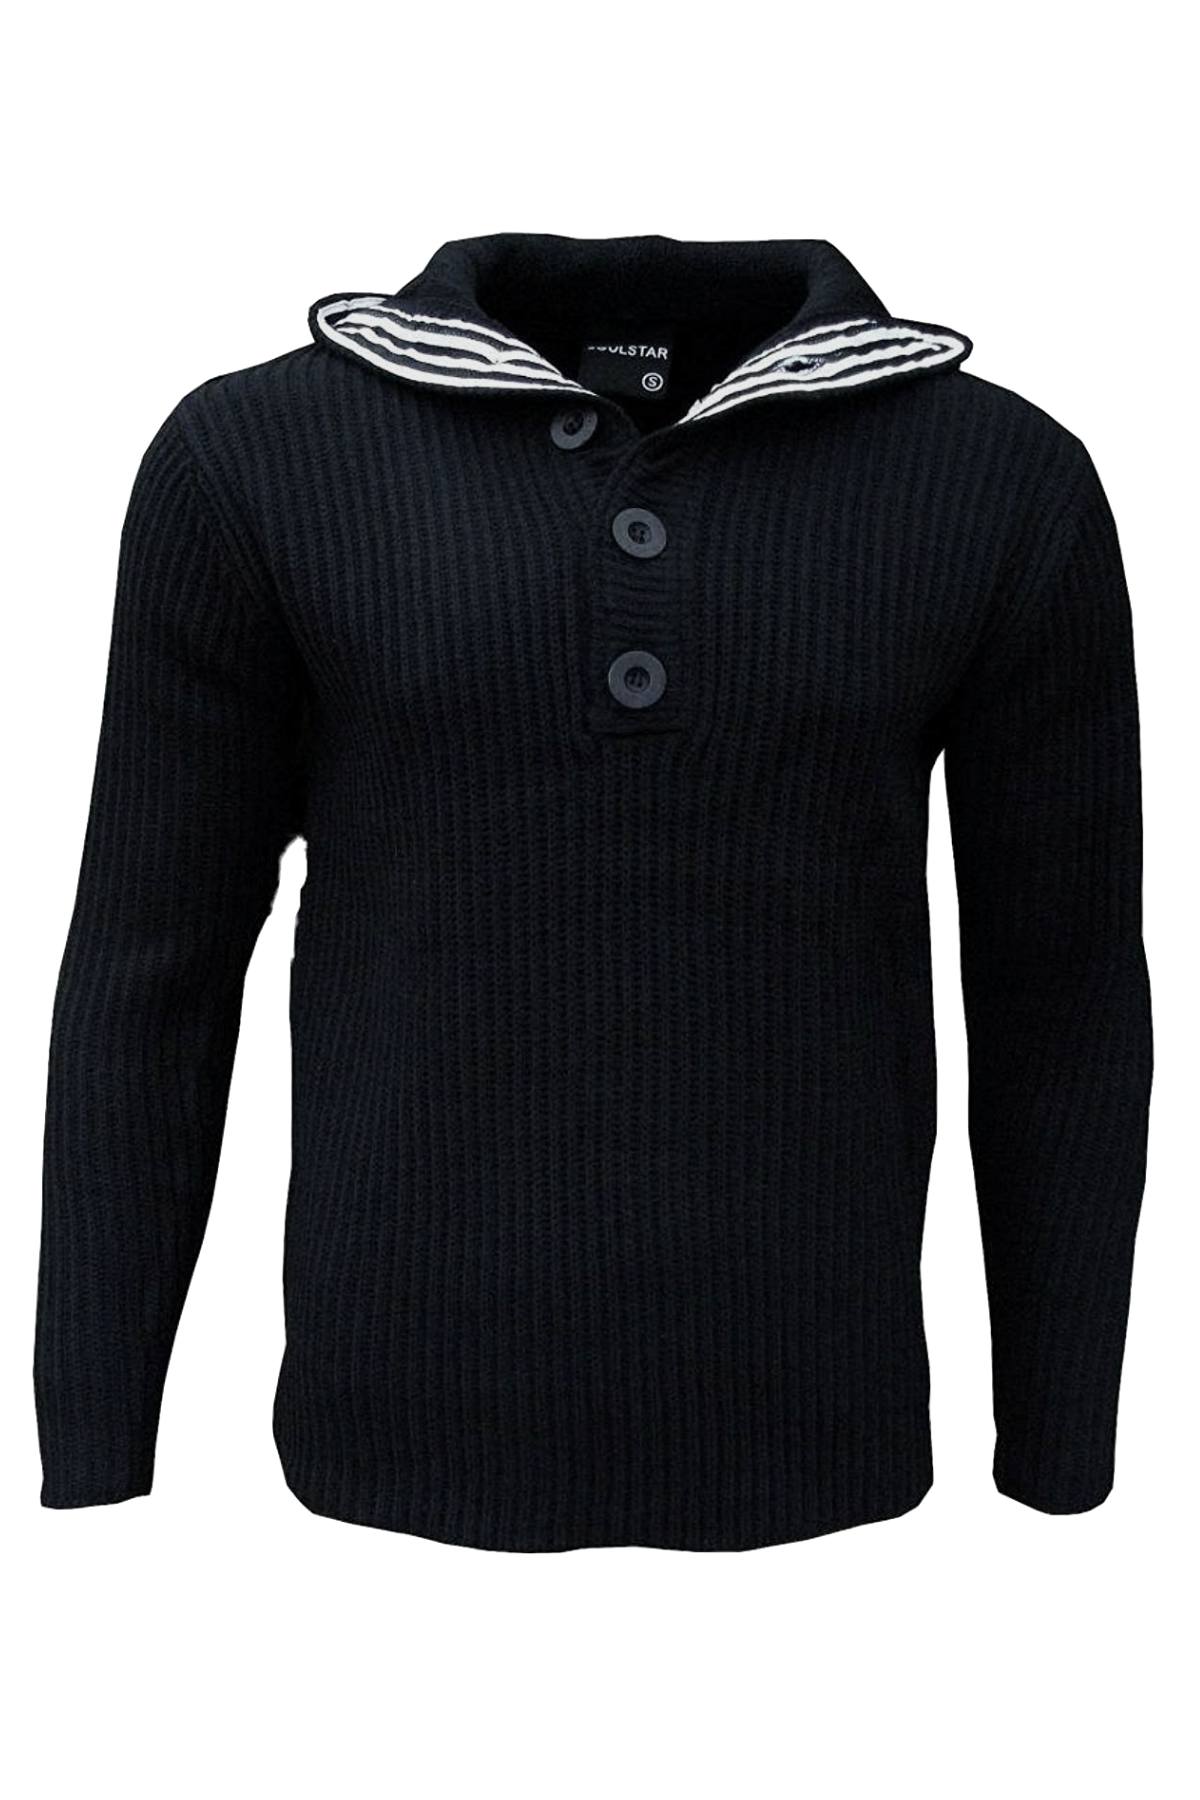 Soul Star Black Knit Hooded Sweater